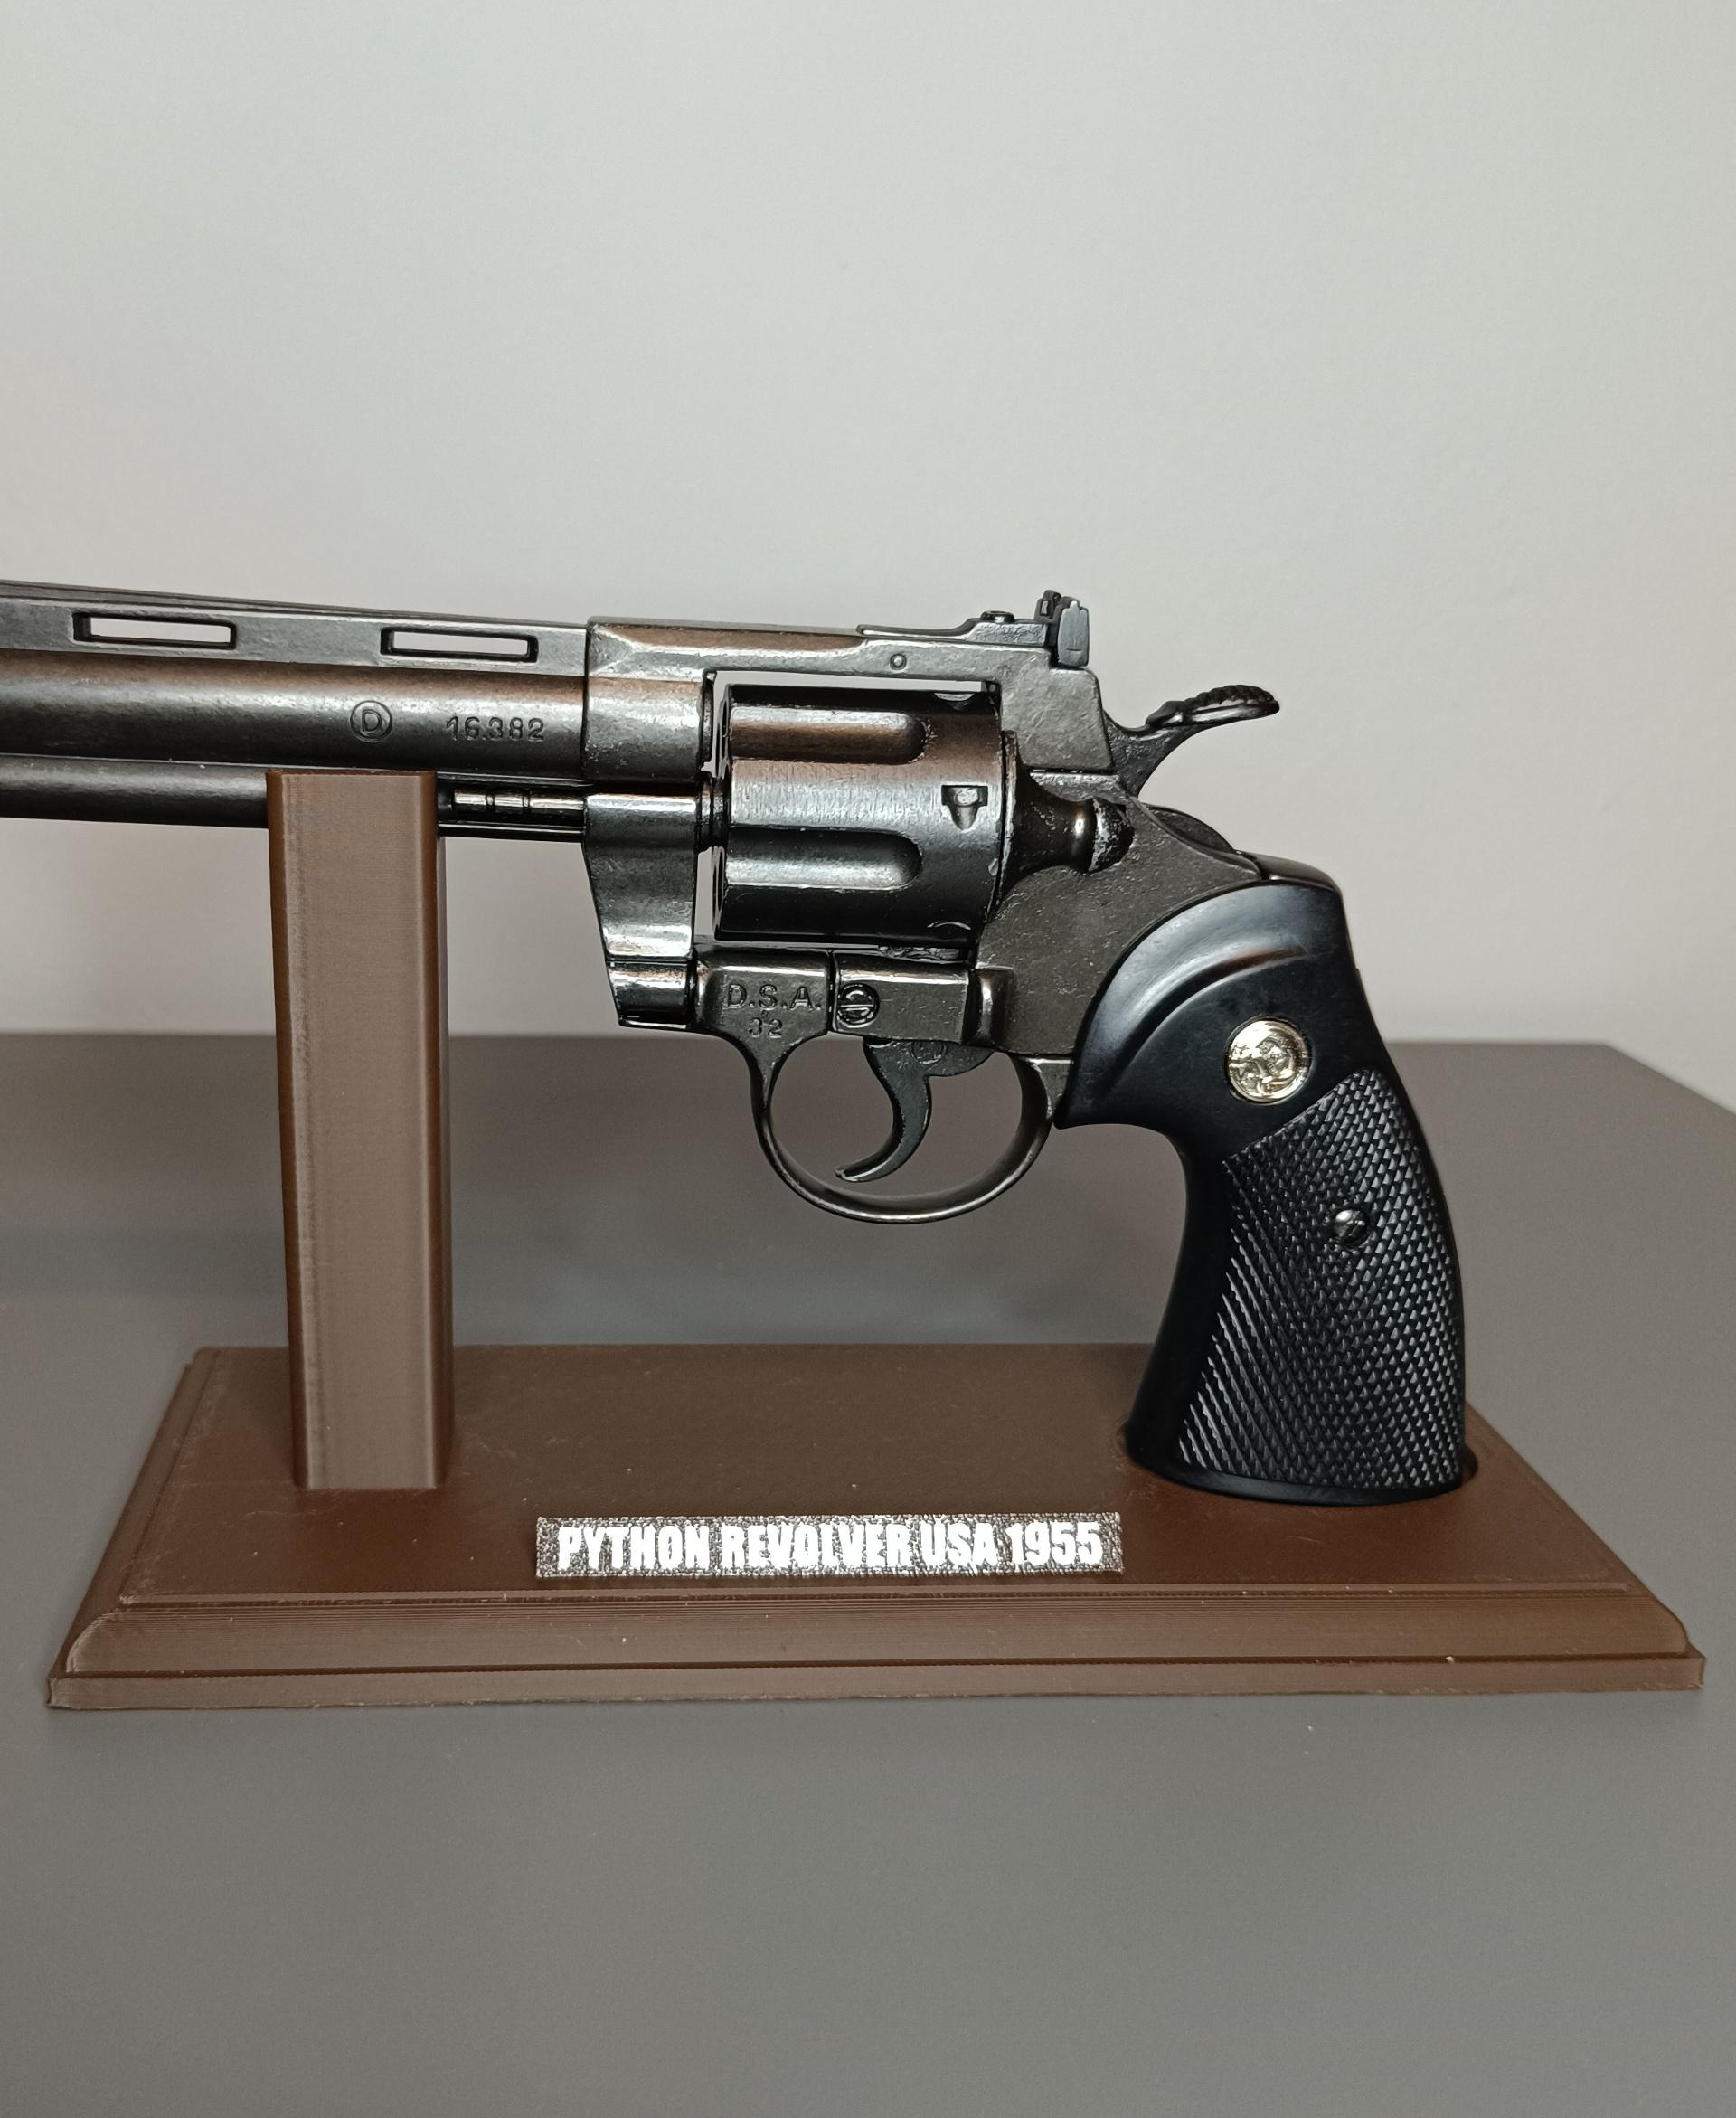 Python Revolver USA 1955 Display Stand 3d model